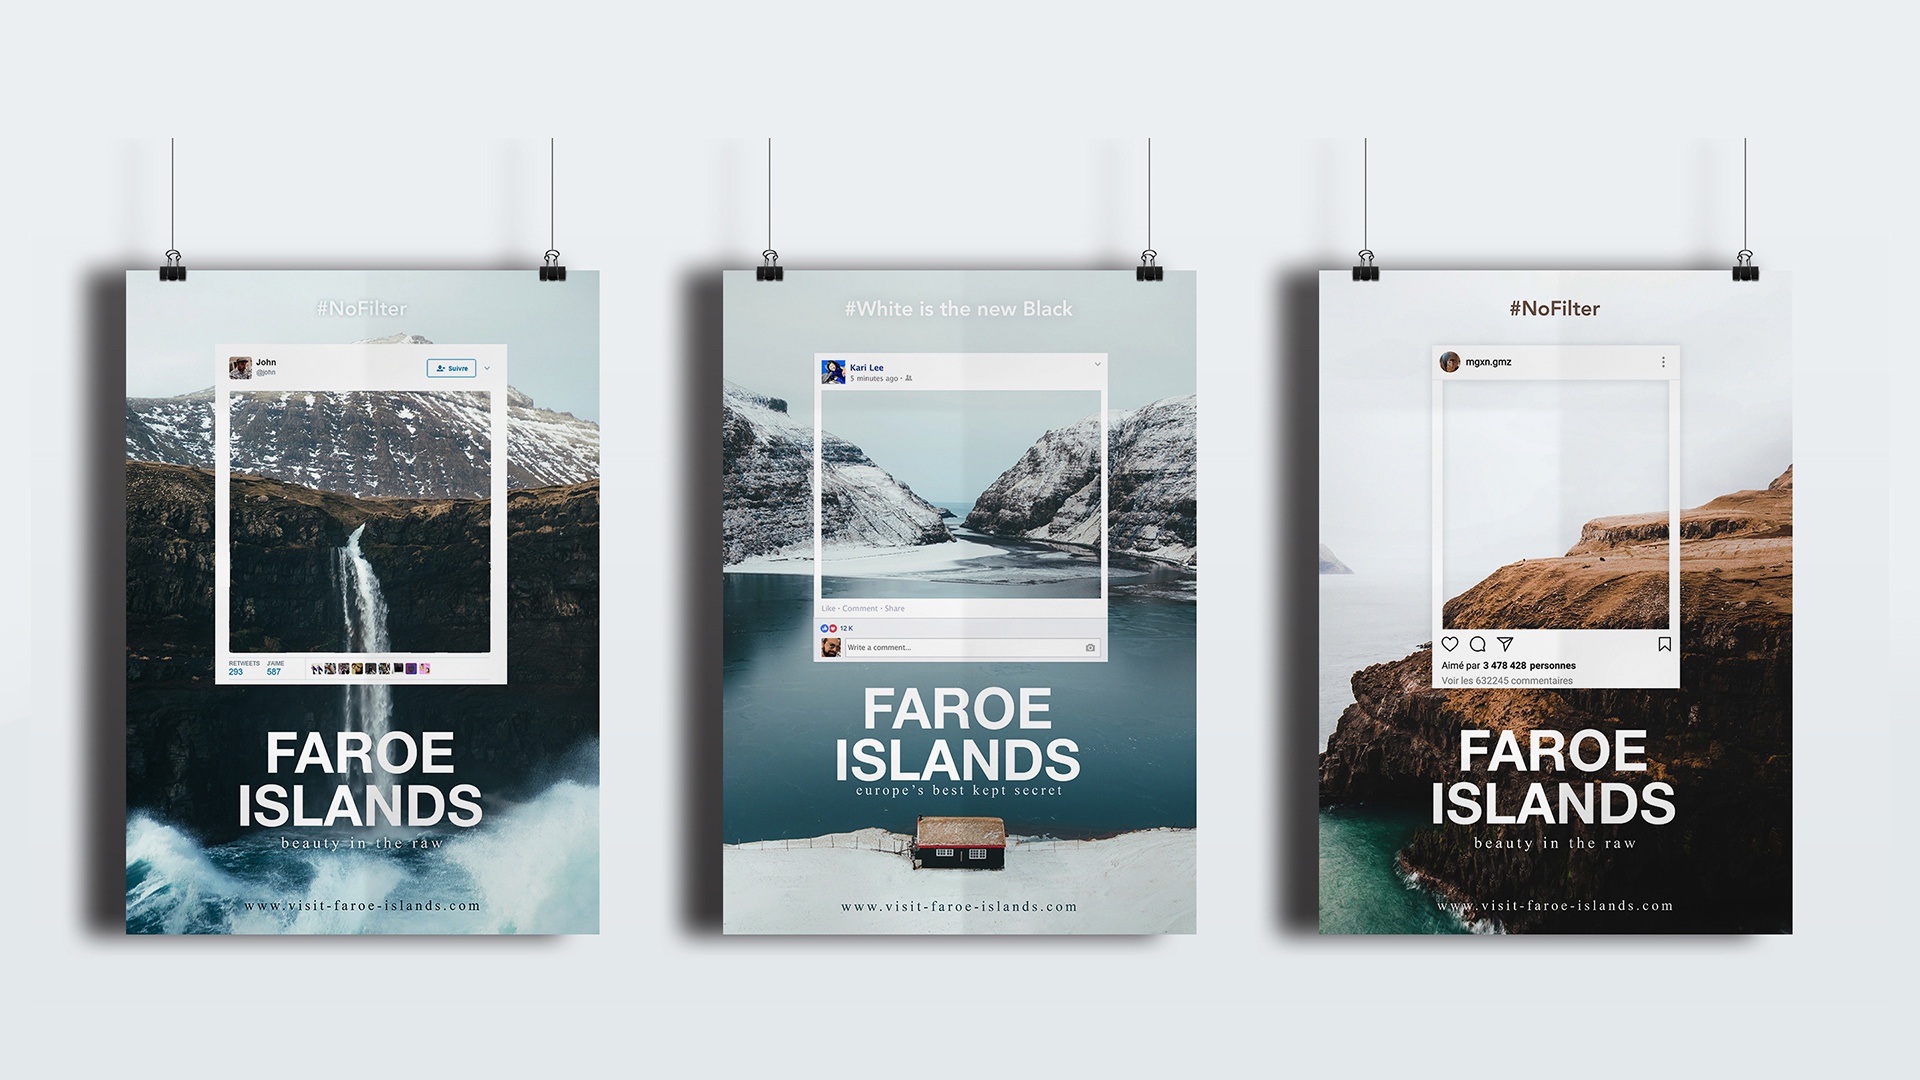 Faroe Islands - Desgin Challenge - Graphic Design - Art Direction - 2020 © Morgan Gomez